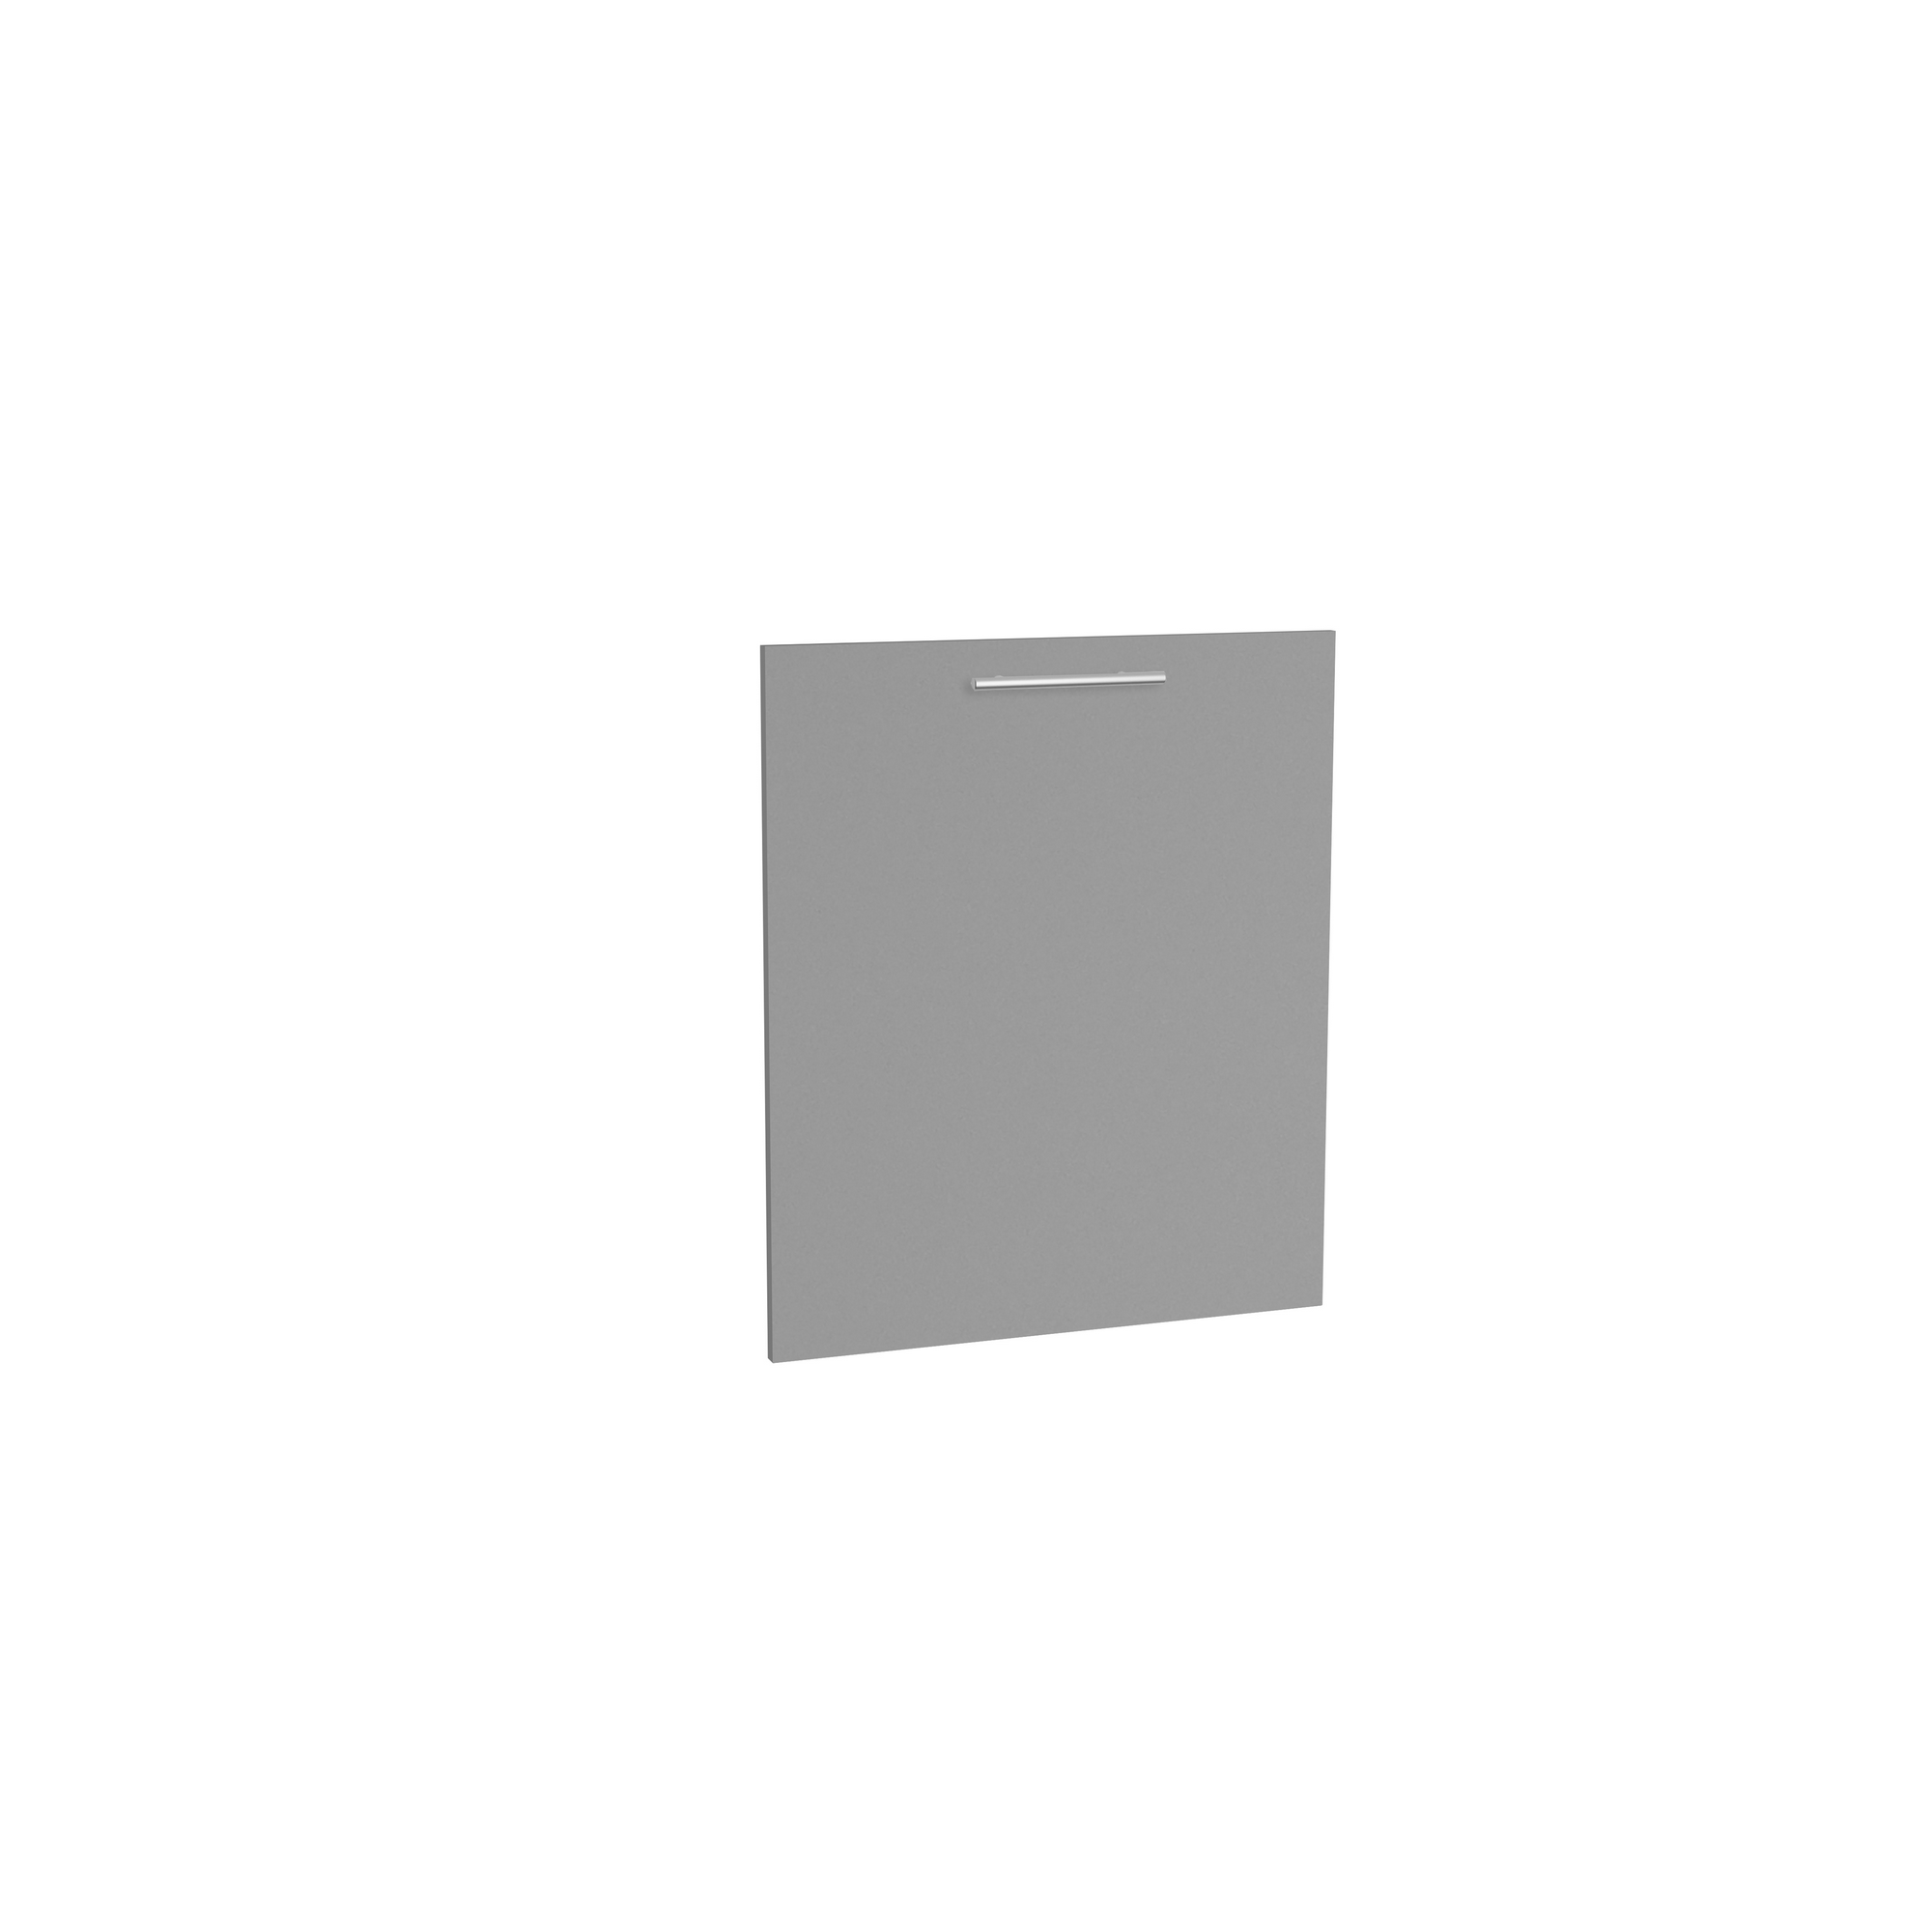 Tür für vollintegrierten Geschirrspüler 'Optikomfort Mats825' grau 59,6 x 70 x 1,6 cm + product picture